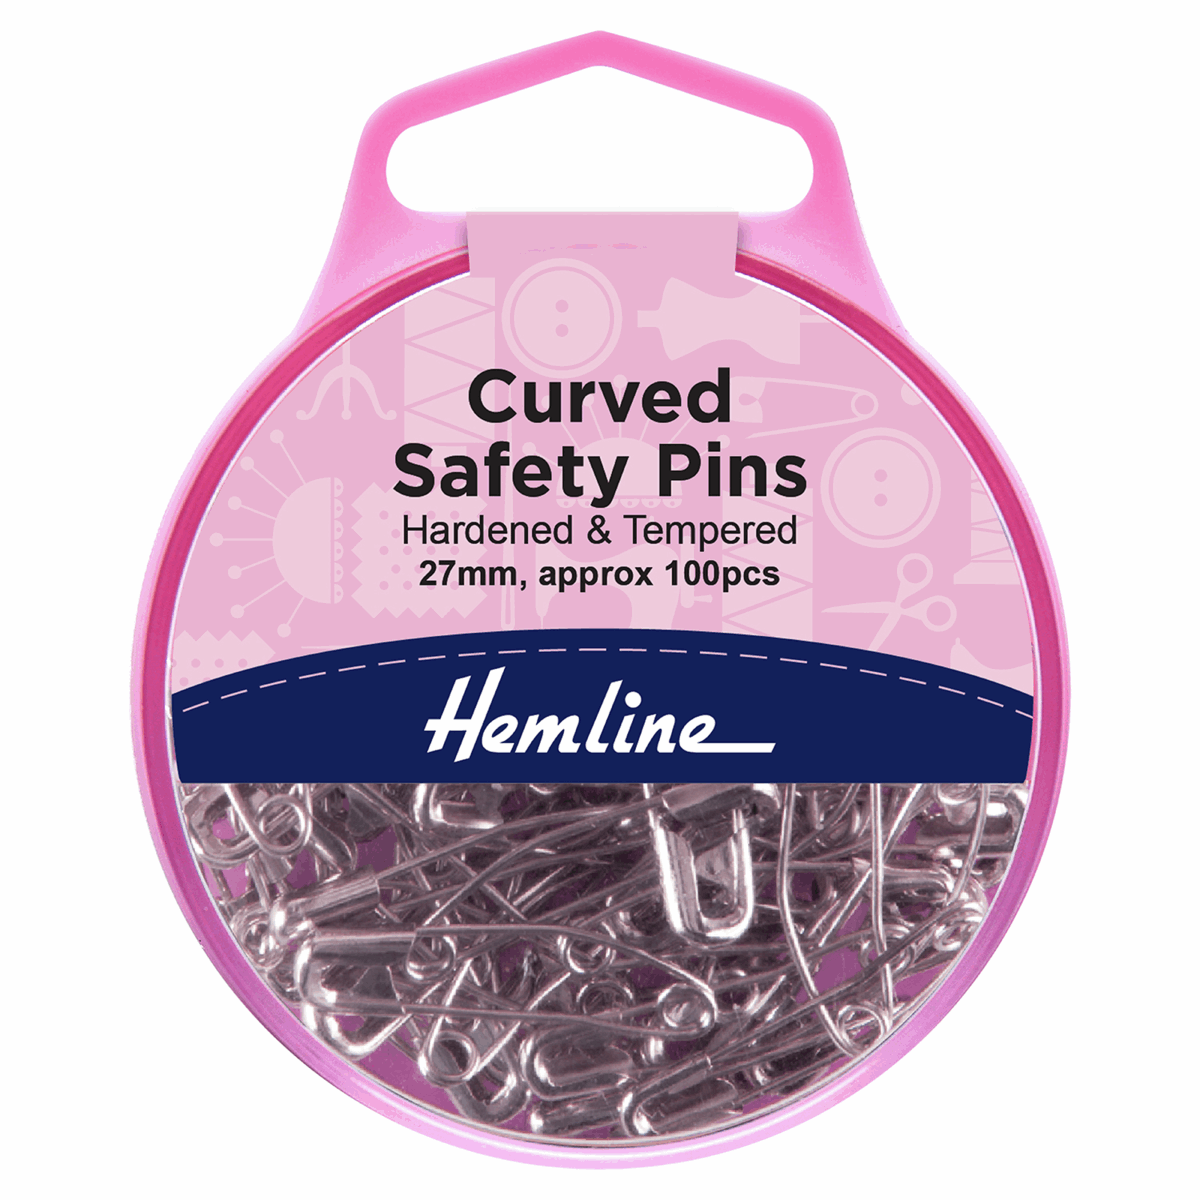 Hemline curved basting pins